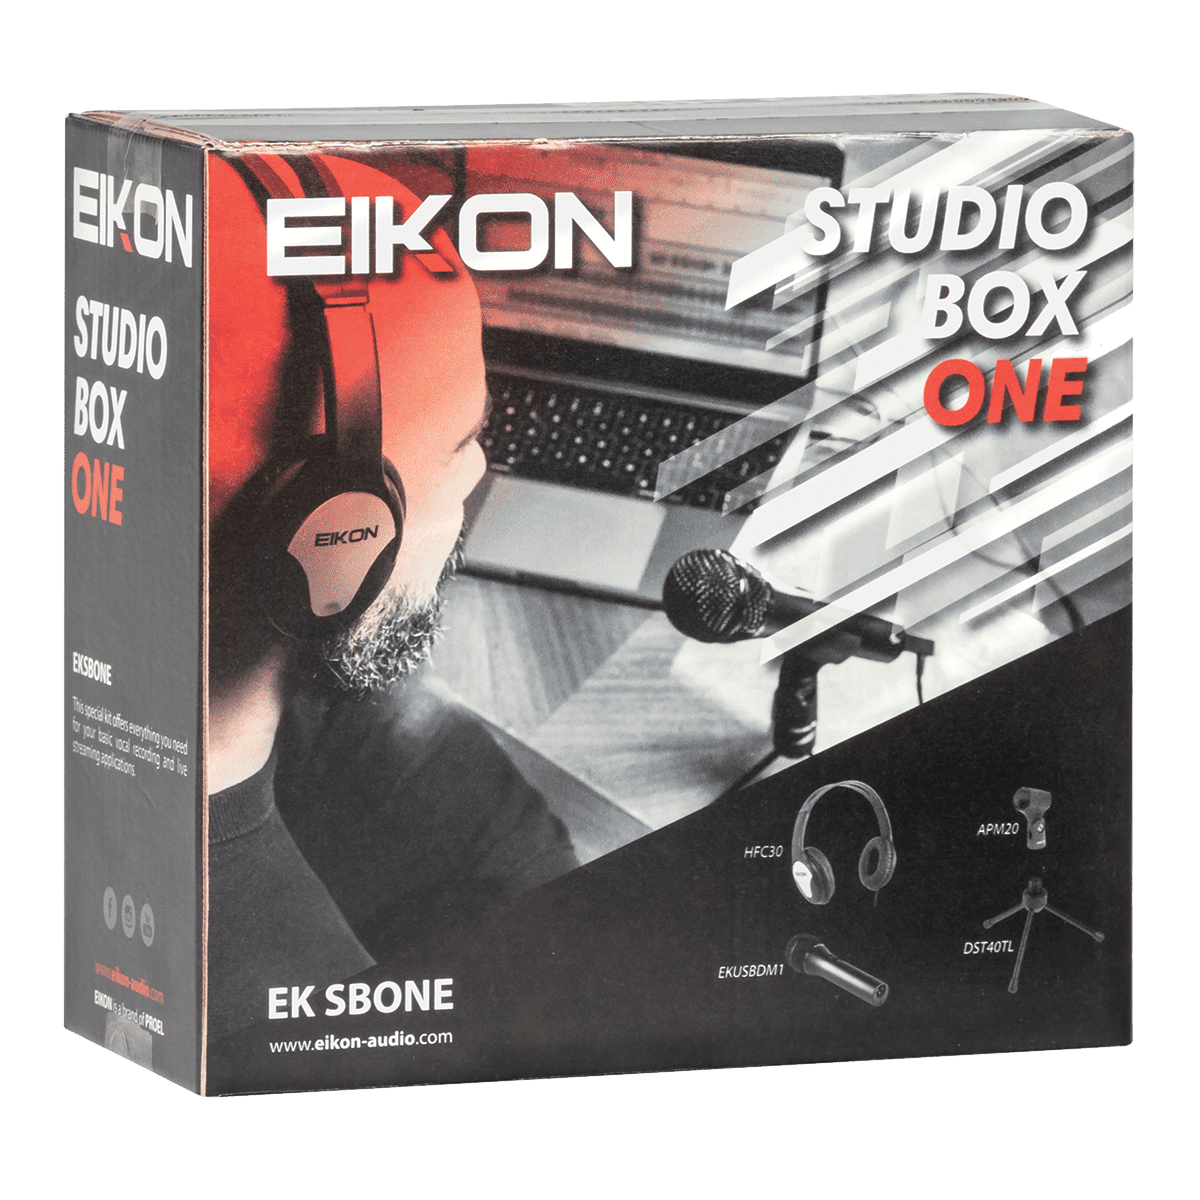 Eikon EKSBONE Basic home recording bundle